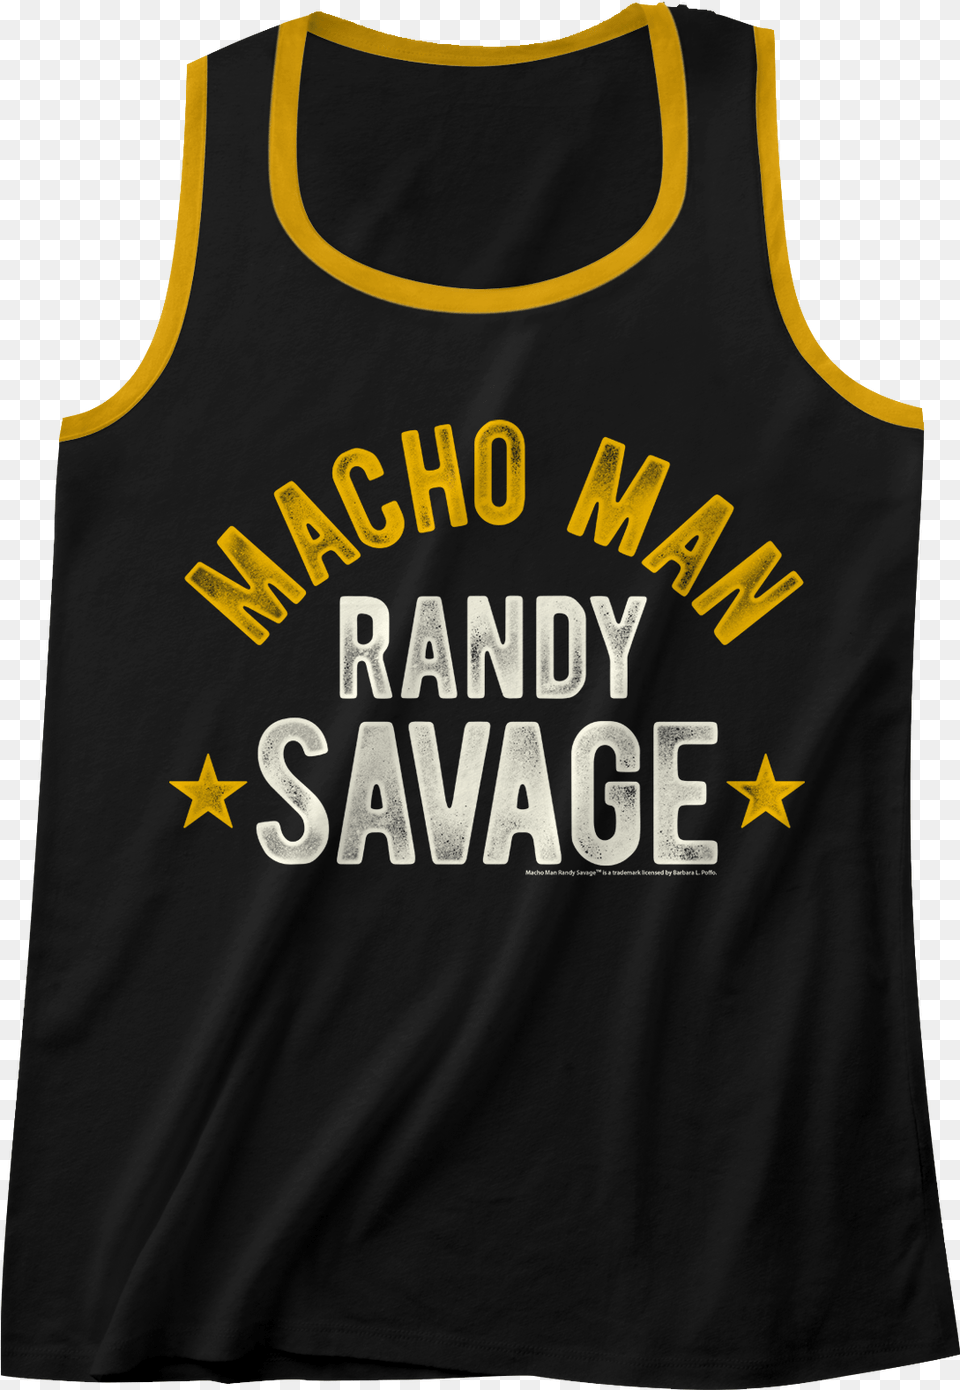 Macho Man Randy Savage Tank Top Vest, Clothing, Shirt, Person, Tank Top Png